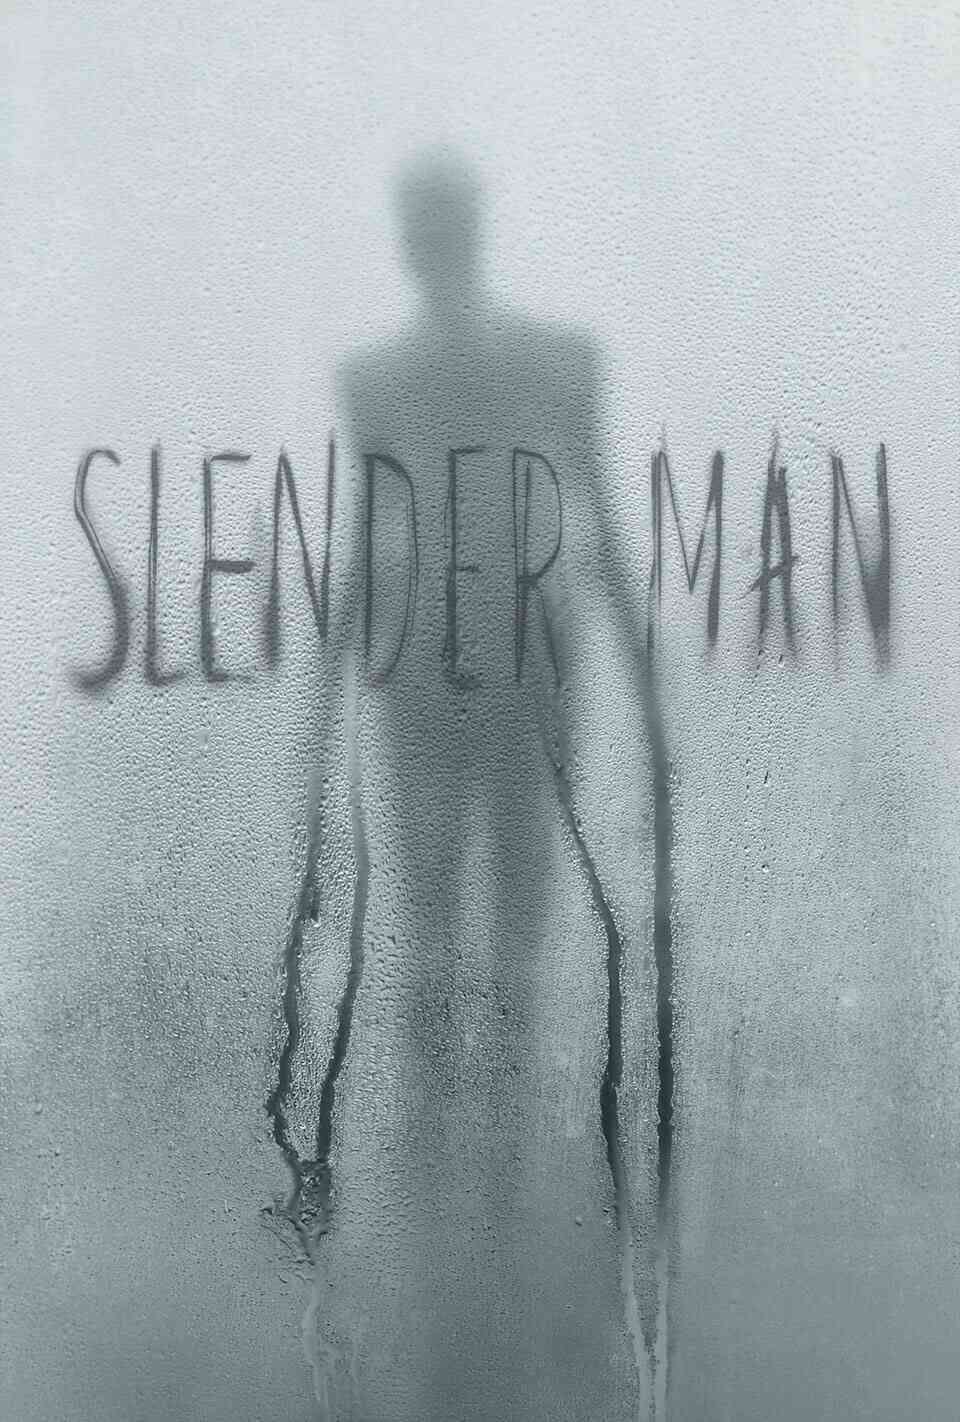 Read Slender Man screenplay (poster)